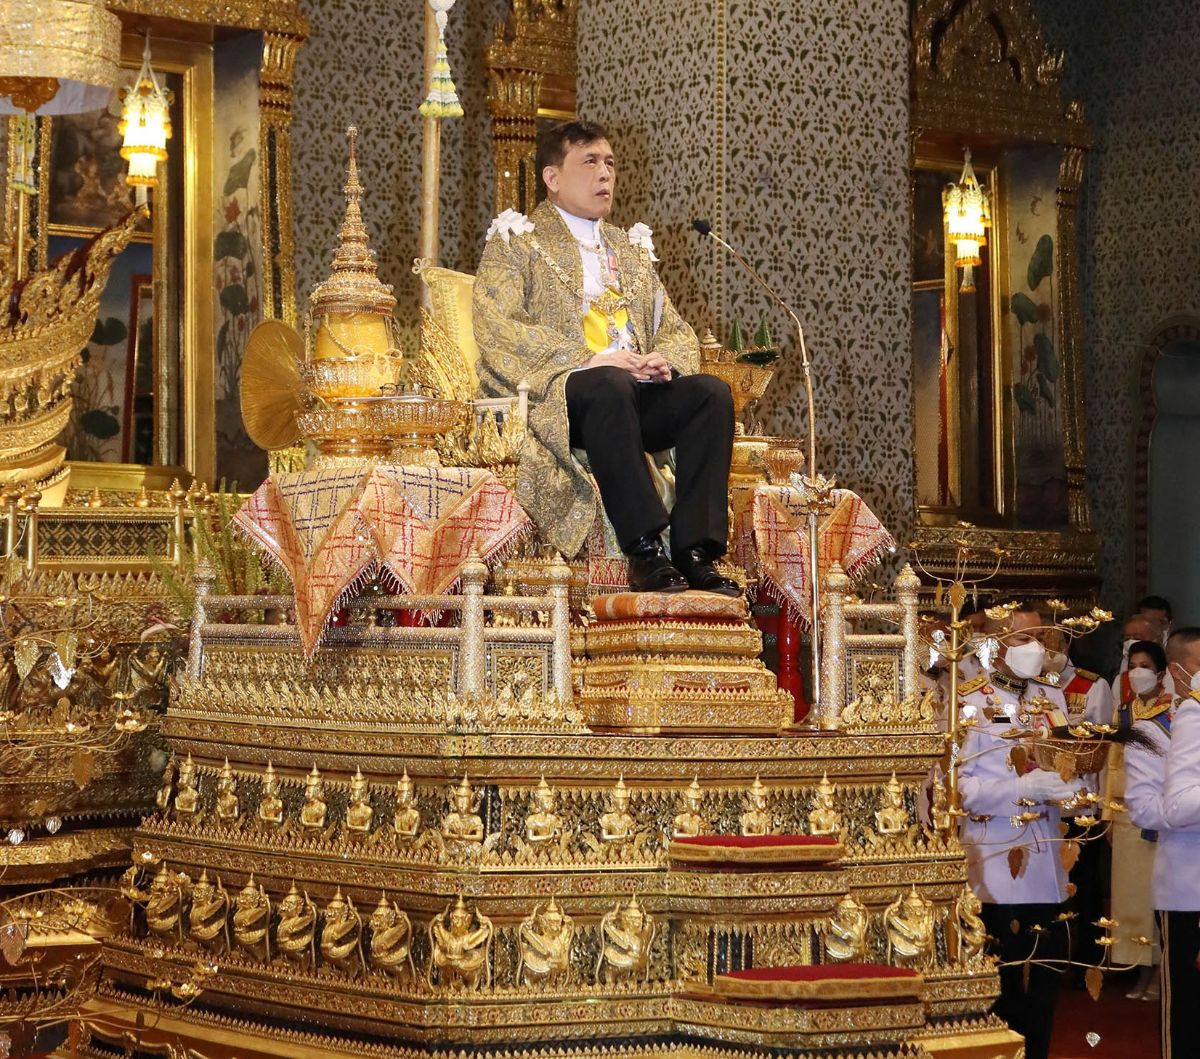 Foto Melihat Raja Terkaya Di Dunia Rayakan Ulang Tahun Duduk Di Singgasana Megah Berlapis Emas